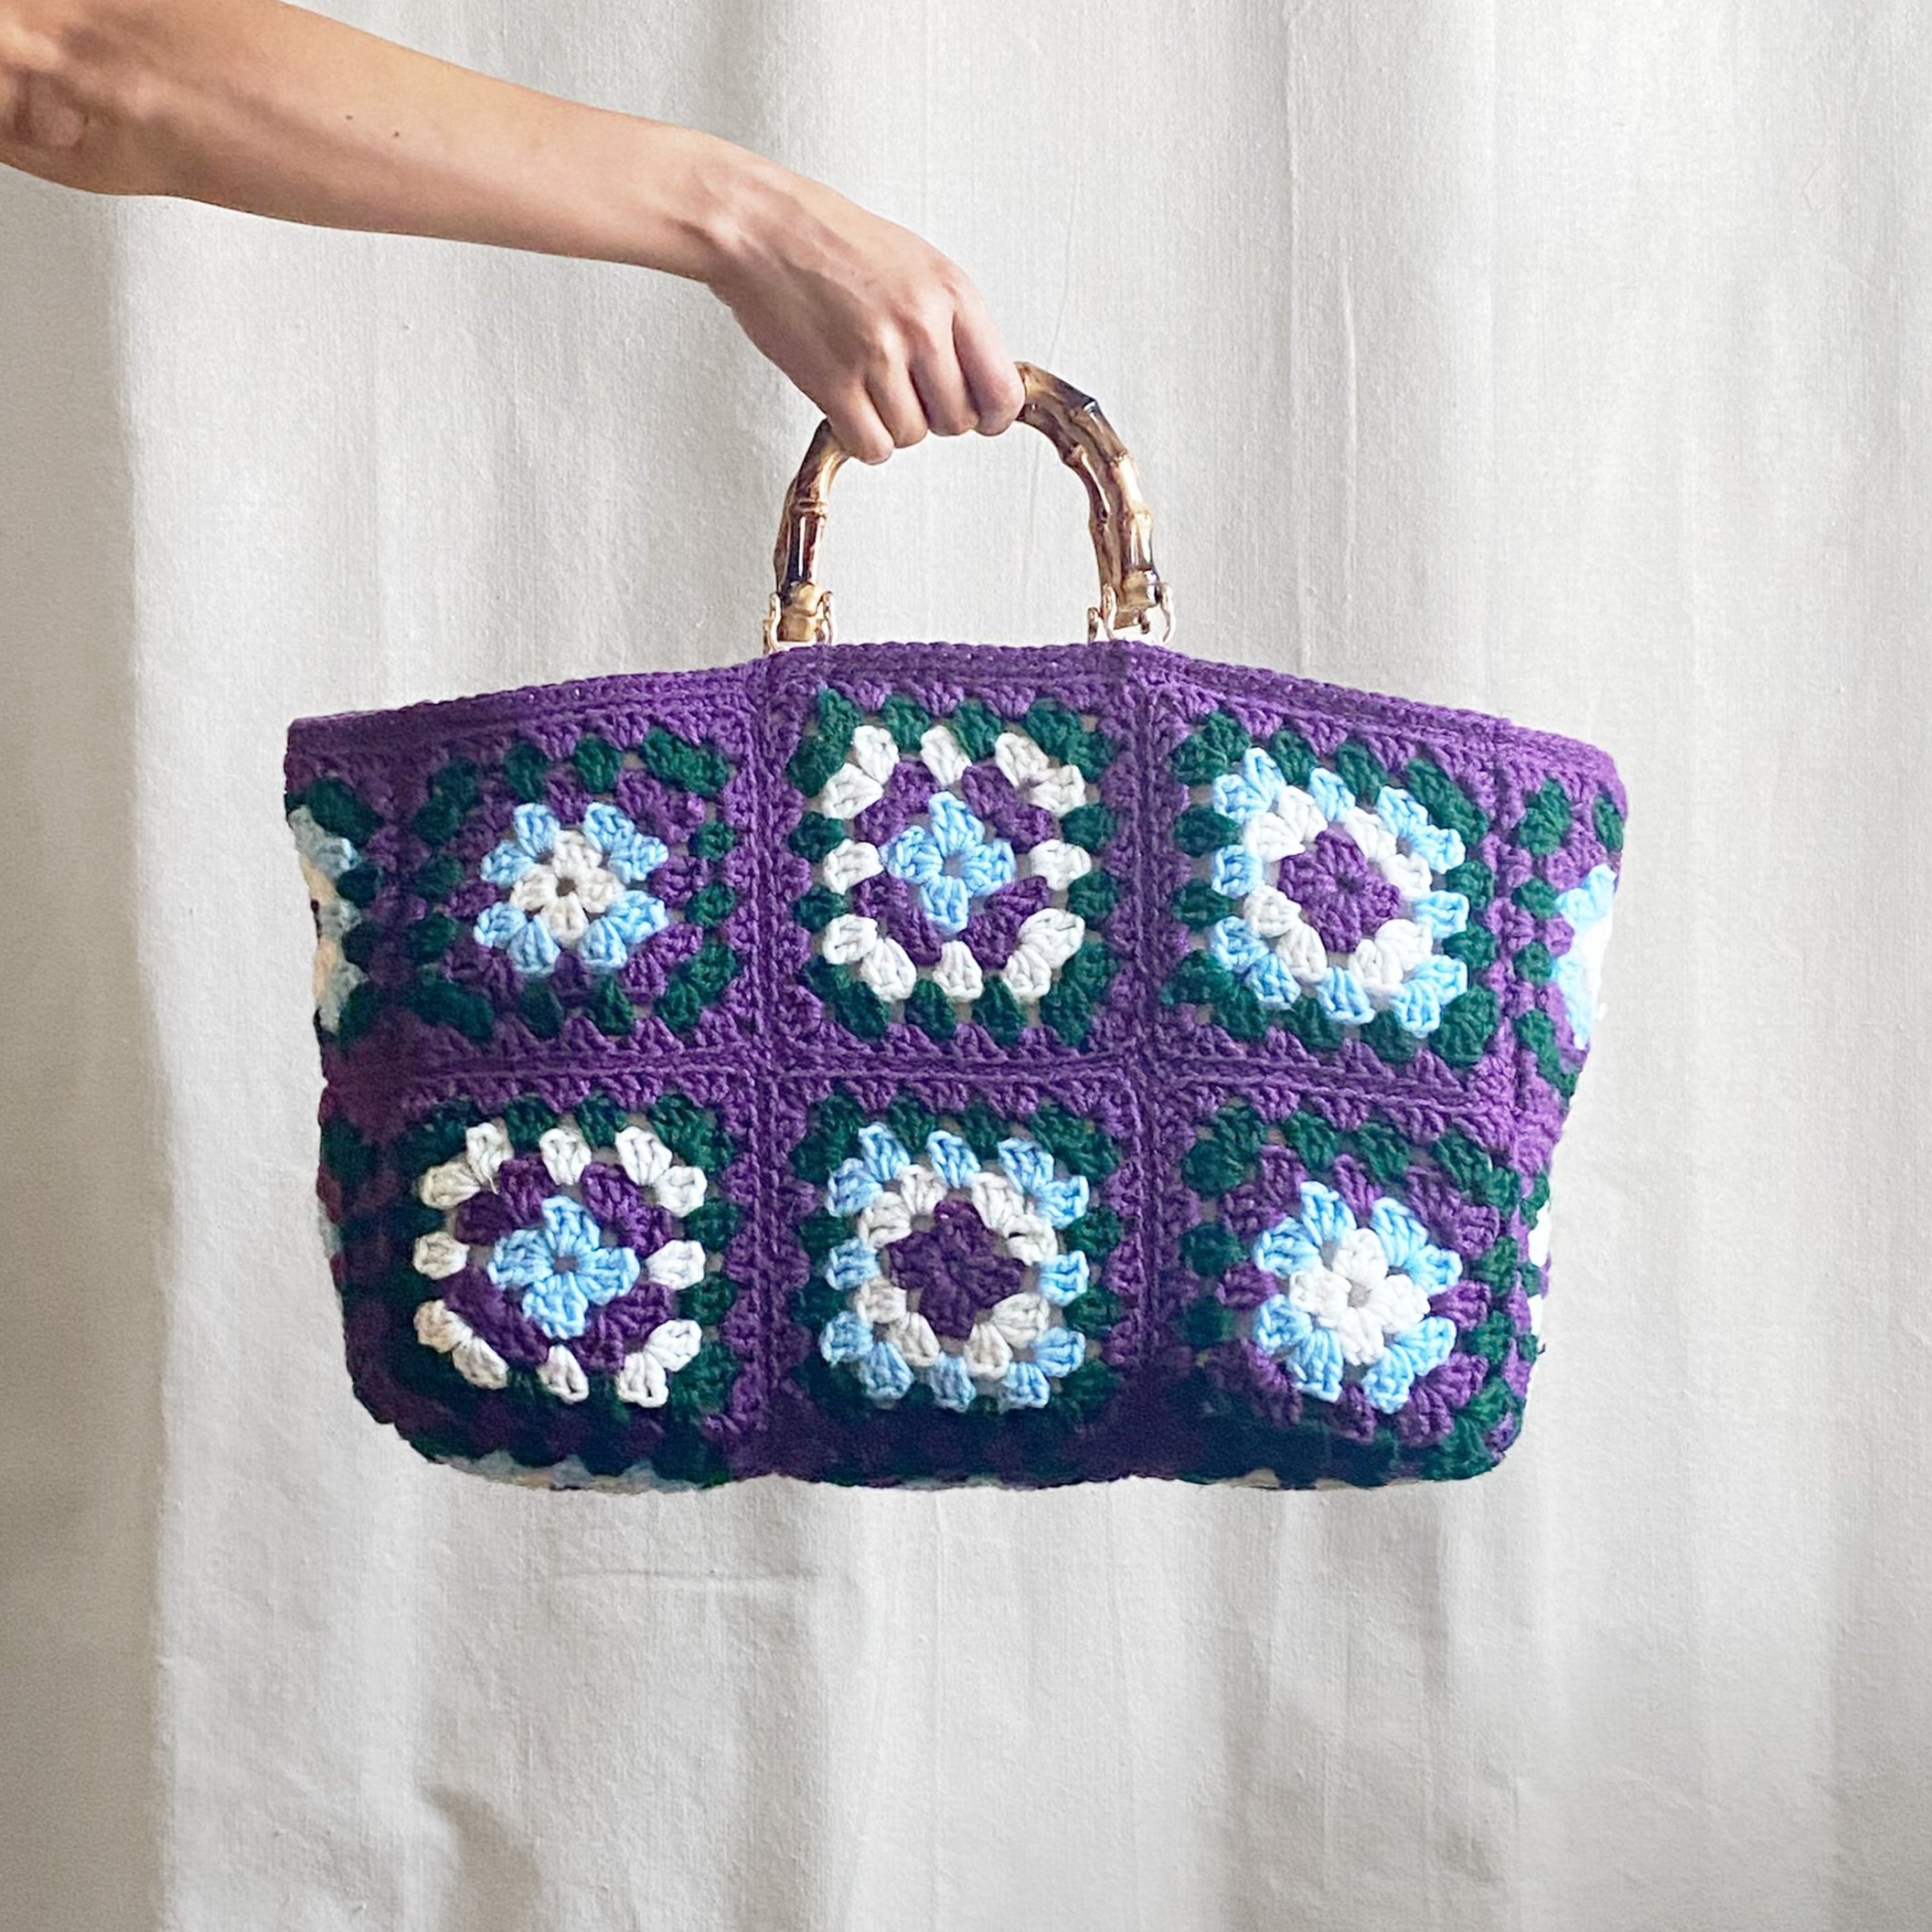 granny+purple+bag+1.jpg